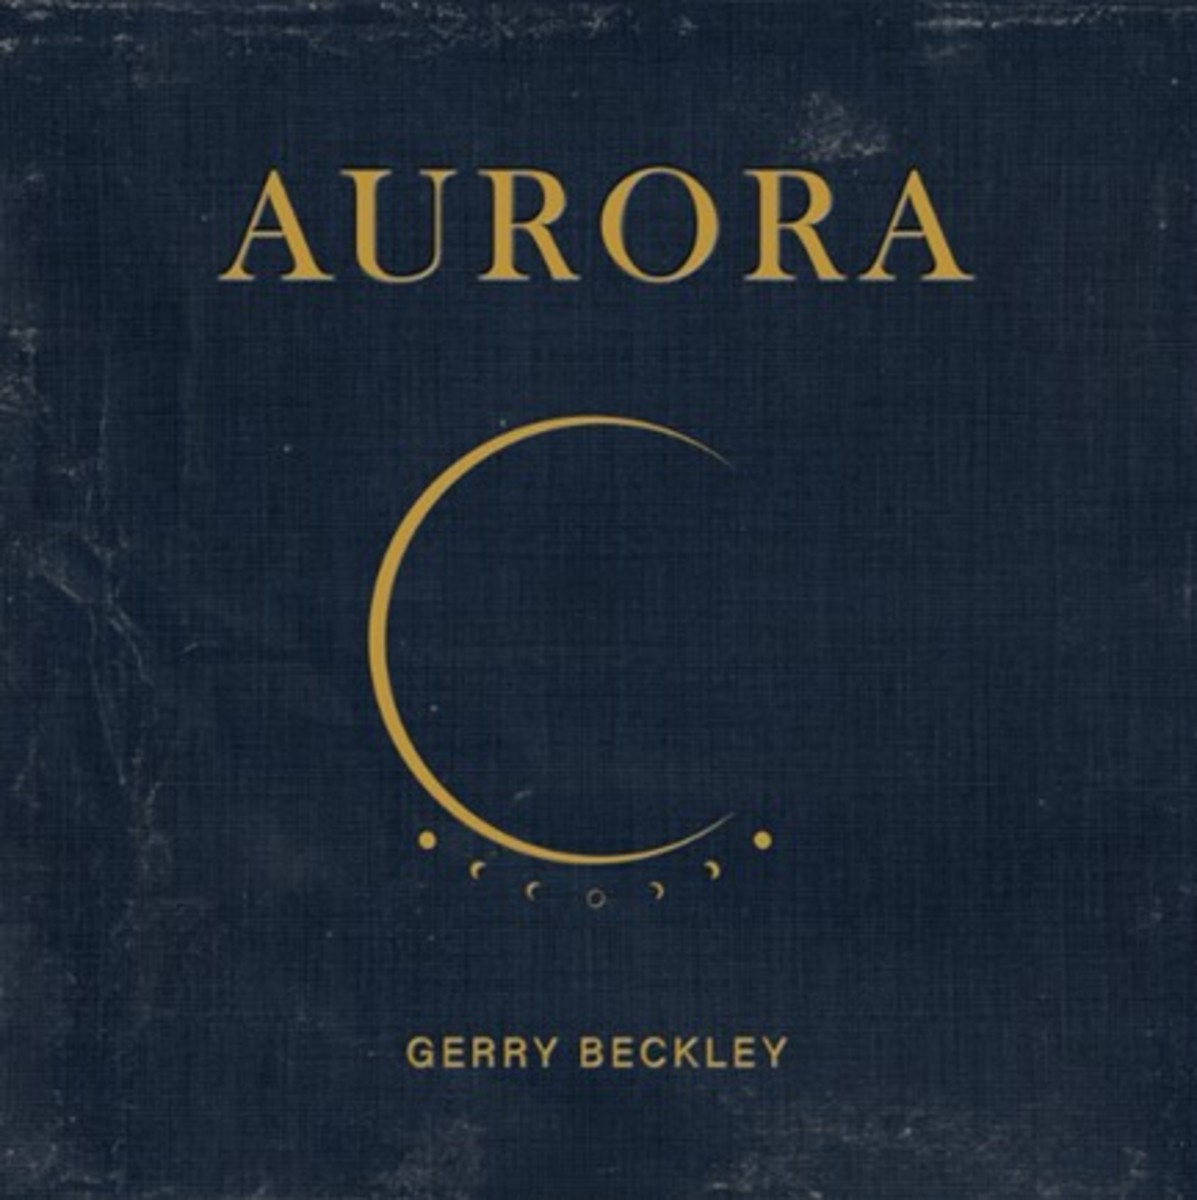 Blue Élan Records will release Aurora on June 17